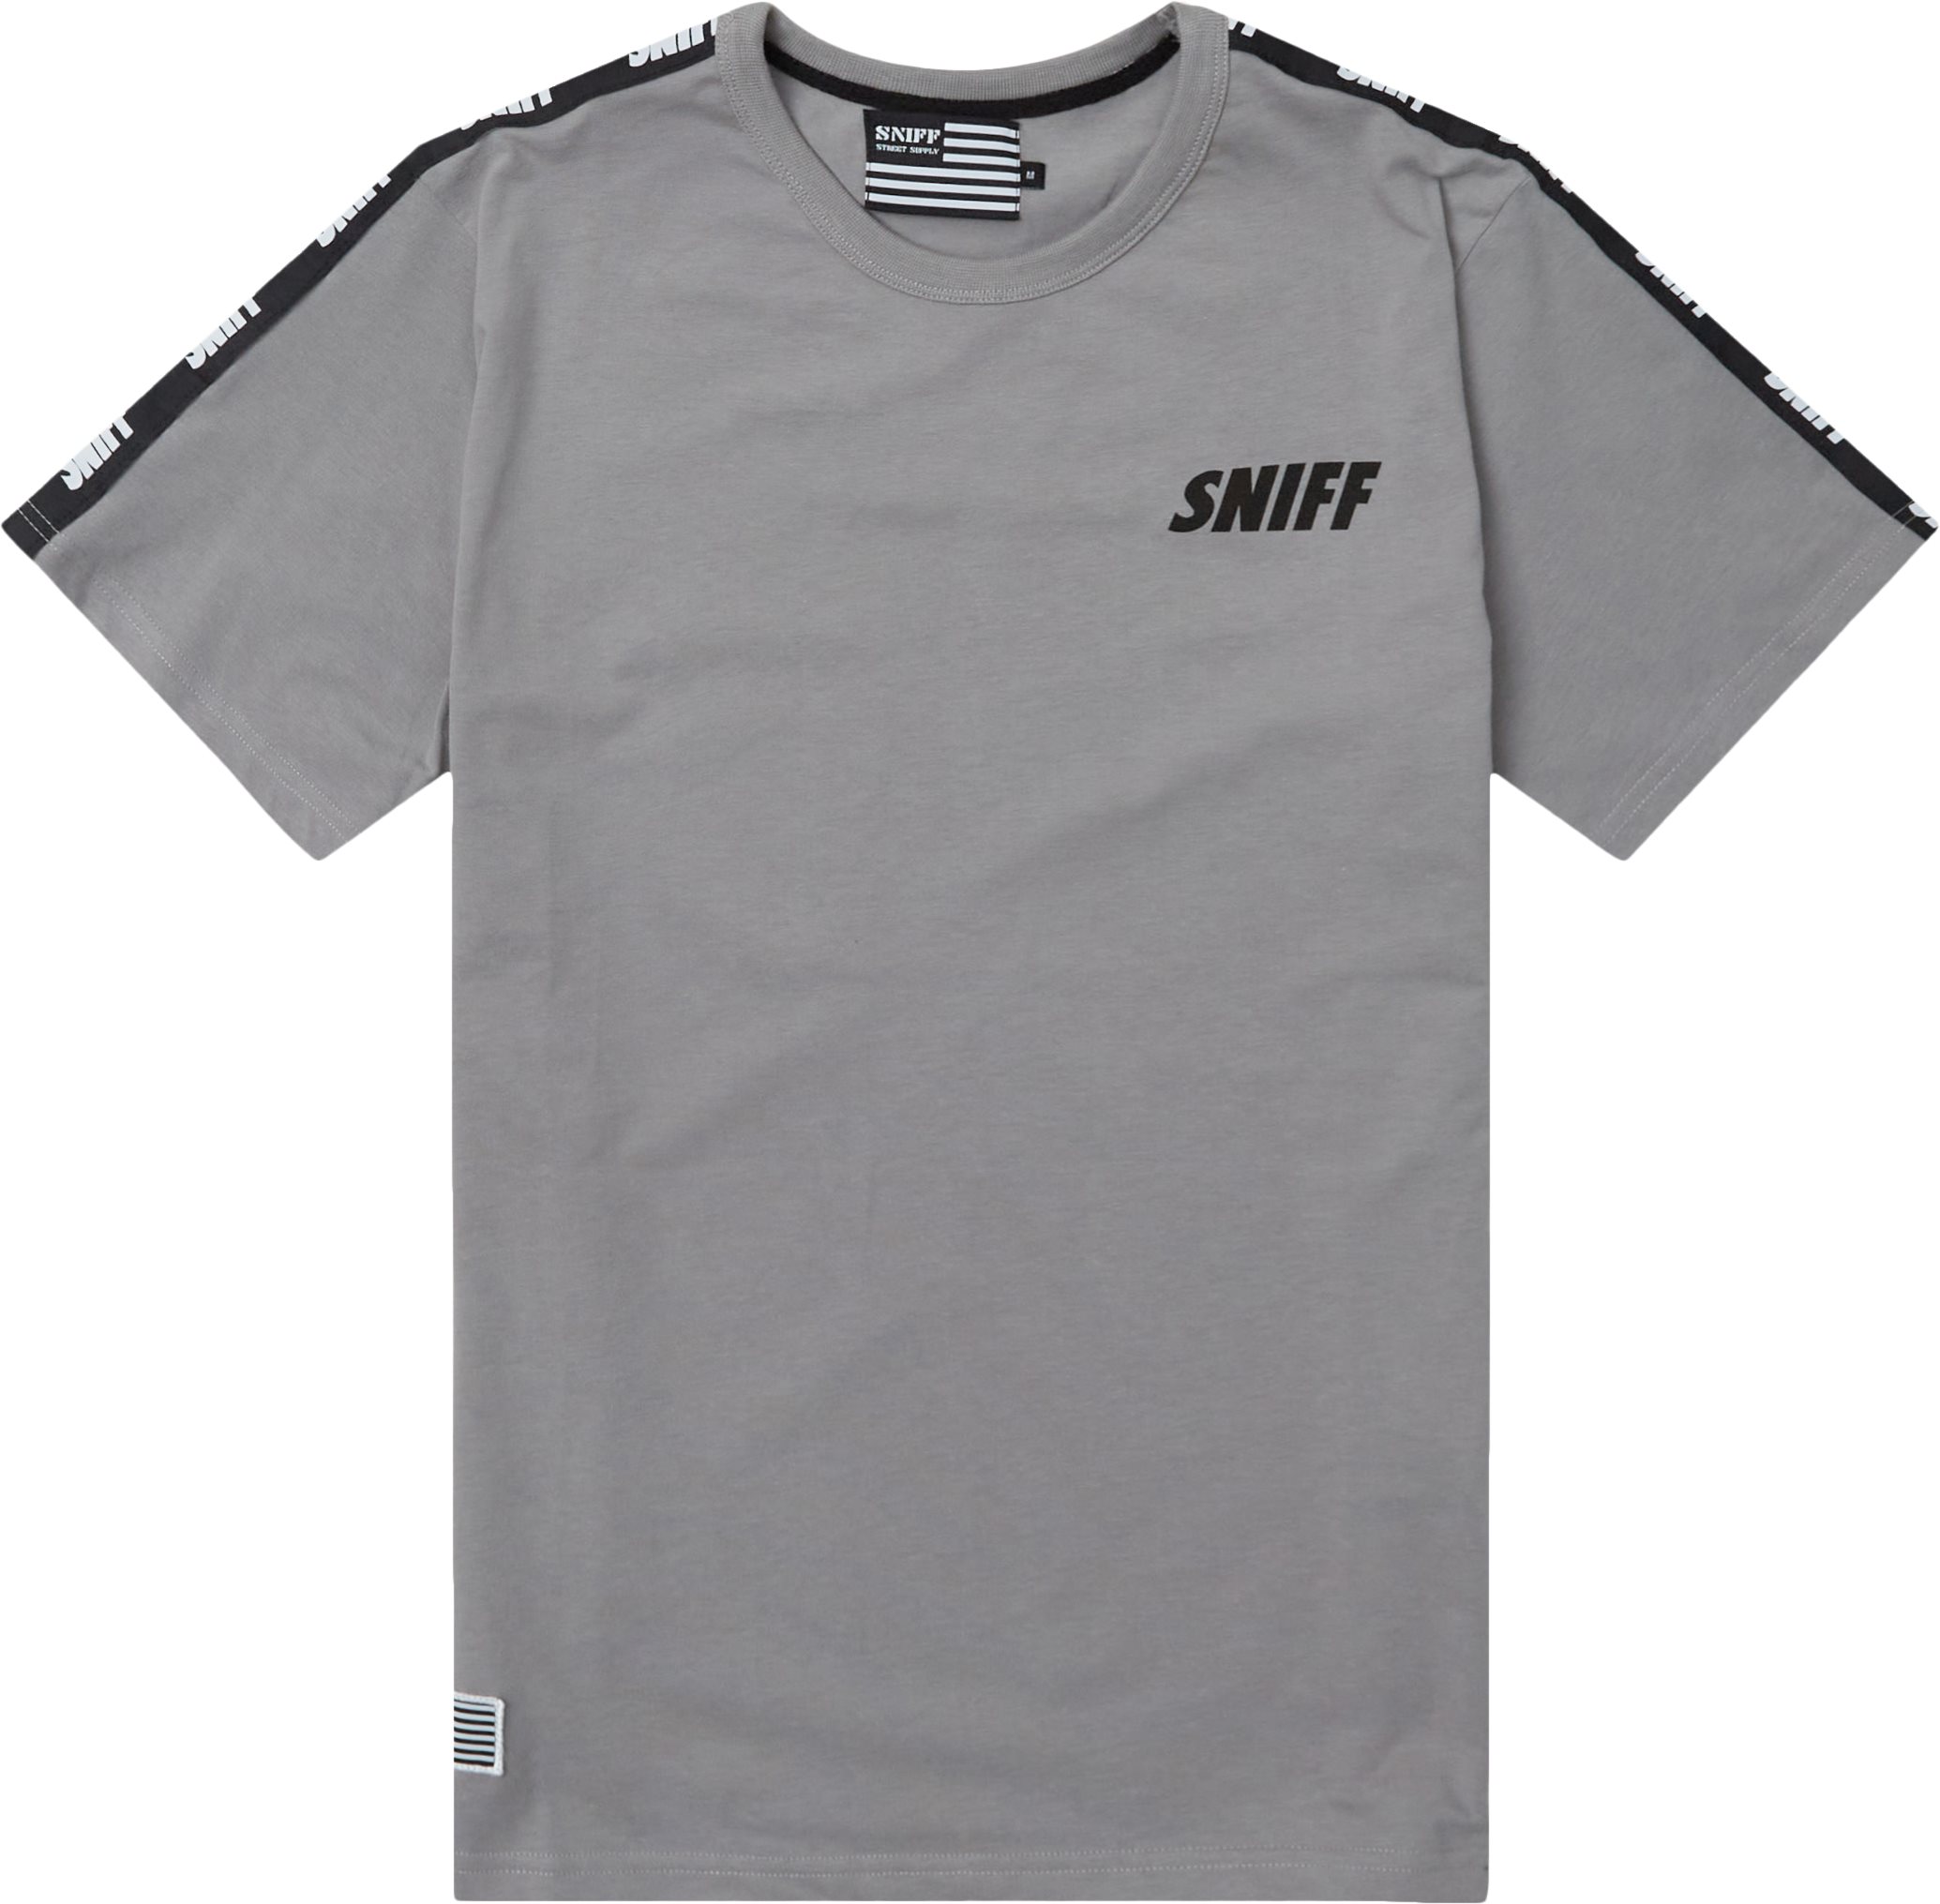 Pointe Tee - T-shirts - Regular fit - Grey